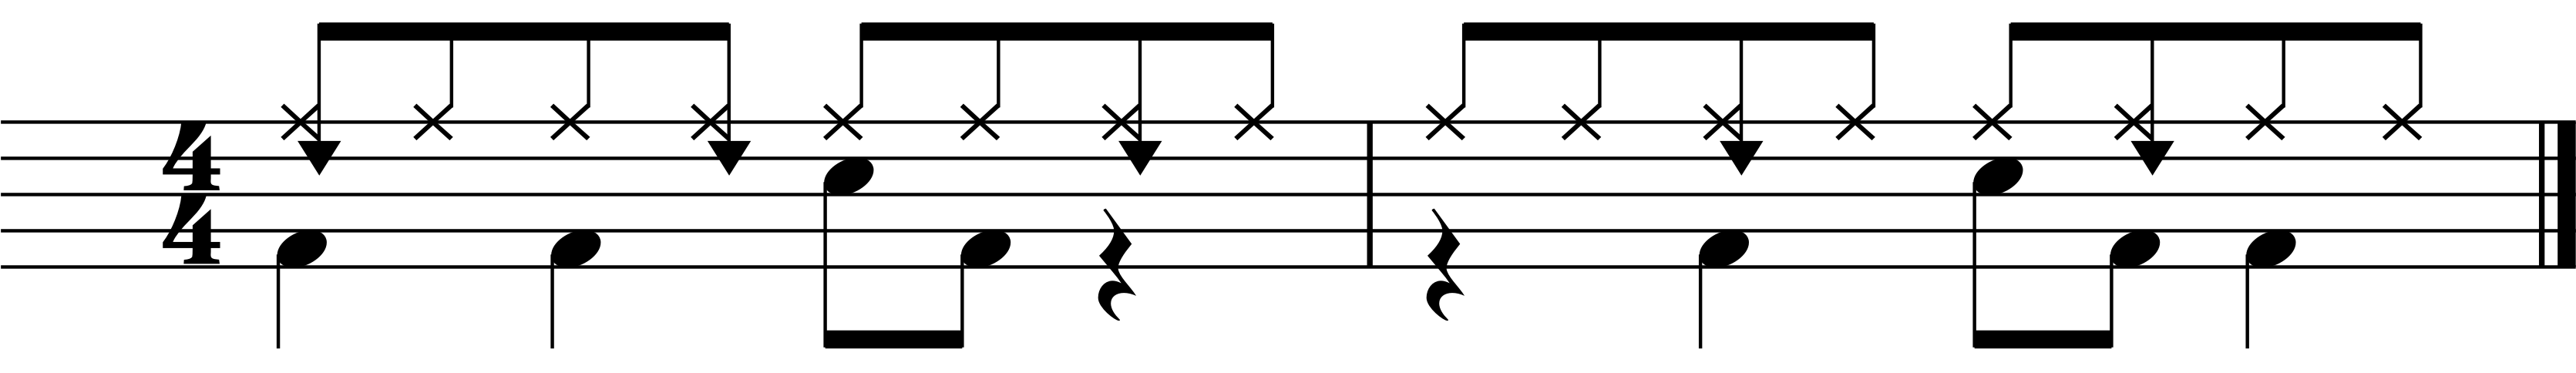 Combining straight rhythms and a bosa nova